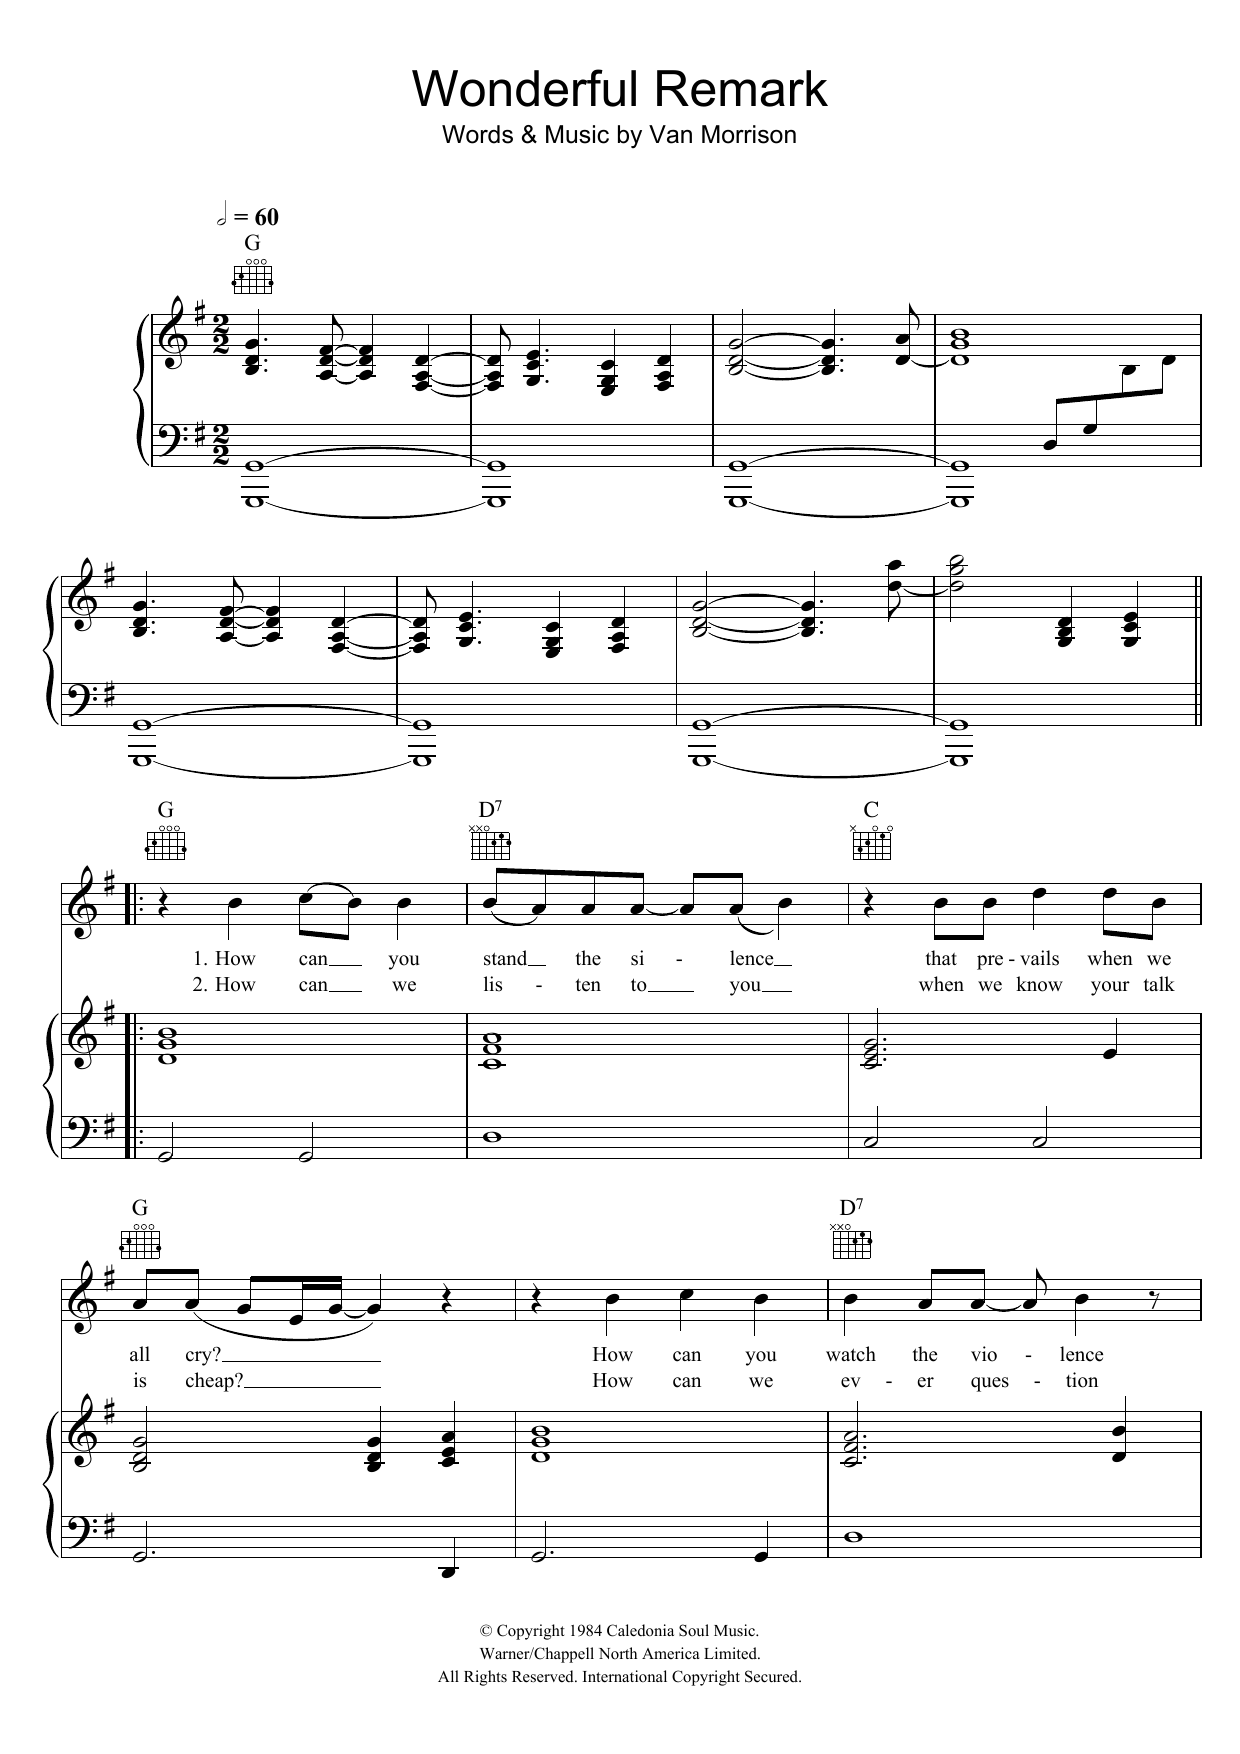 Van Morrison Wonderful Remark Sheet Music Notes & Chords for Piano, Vocal & Guitar - Download or Print PDF